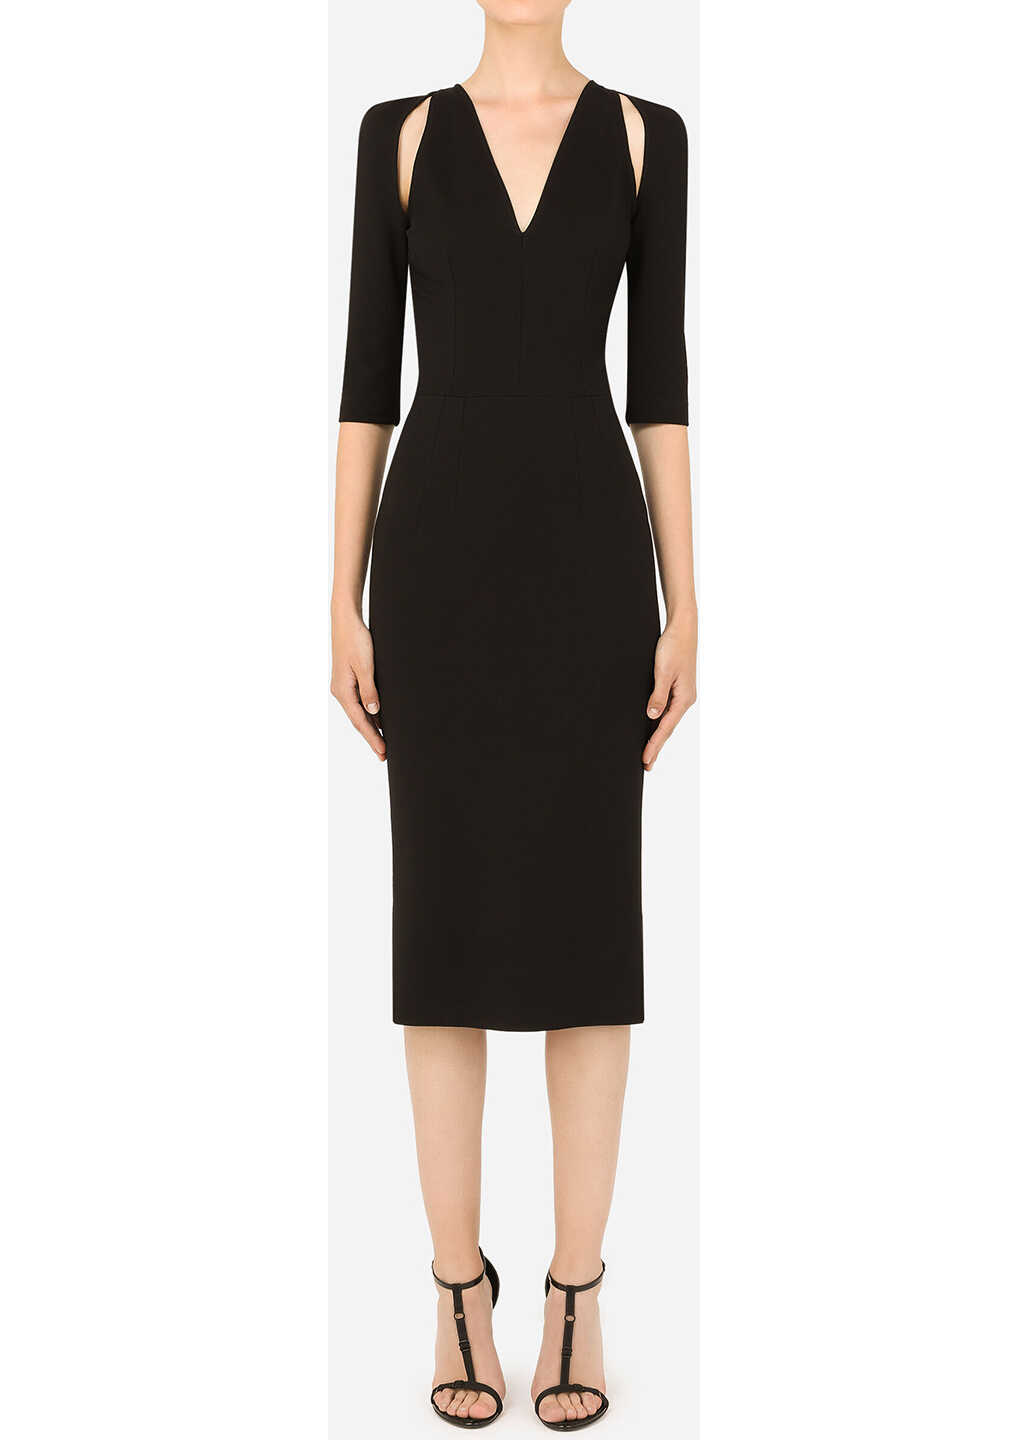 Dolce & Gabbana Calf-Length Dress F6ZI7T FUGKF Black image